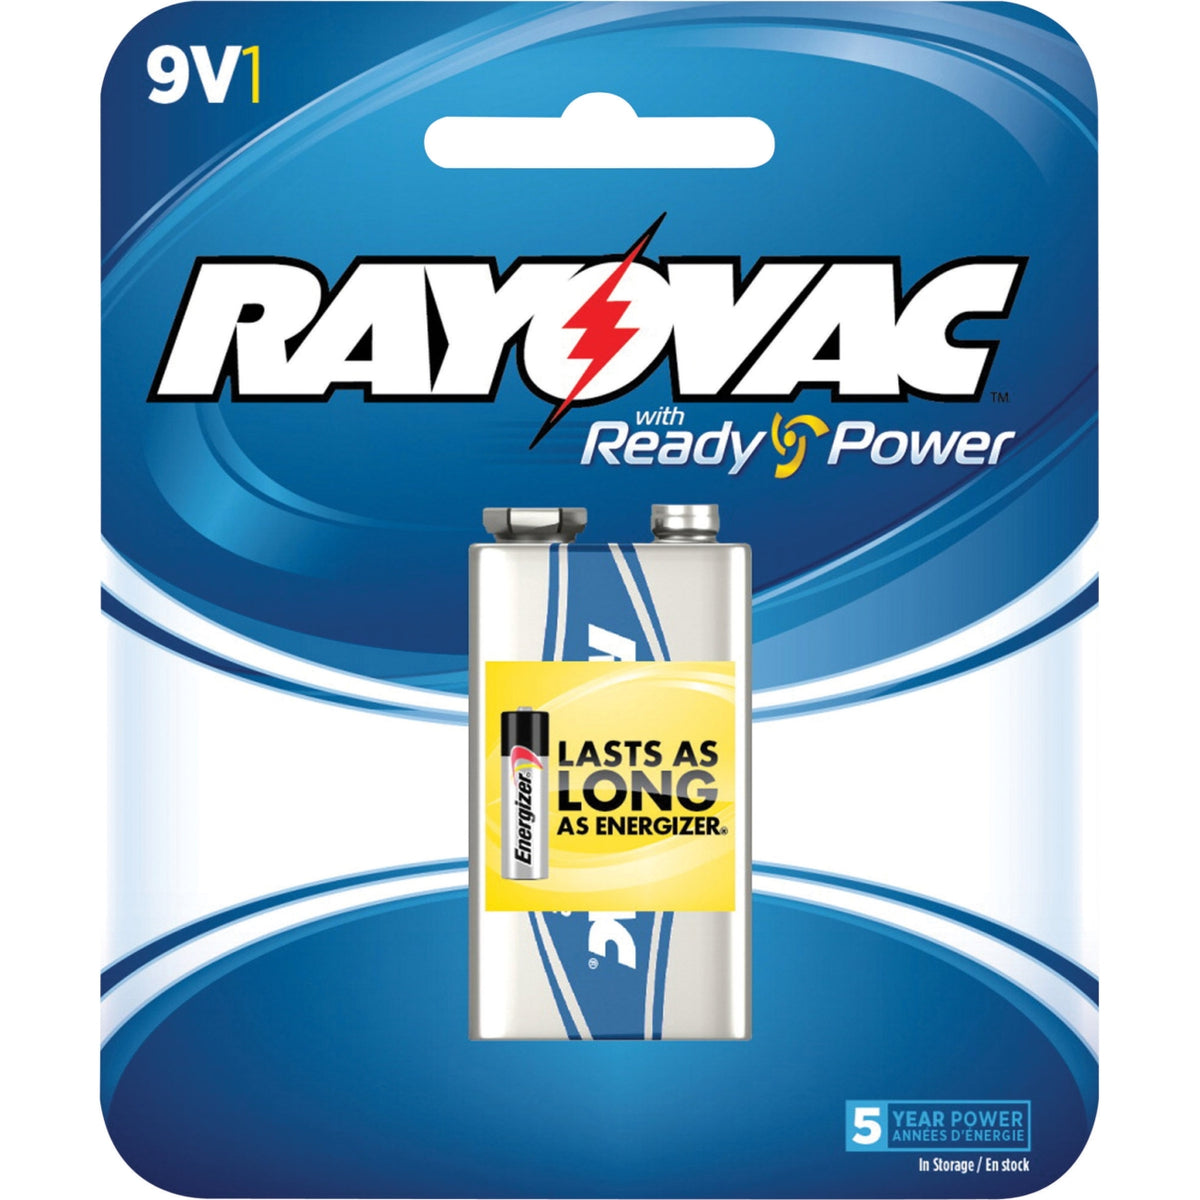 Rayovac A1604-1F 9V Alkaline Battery